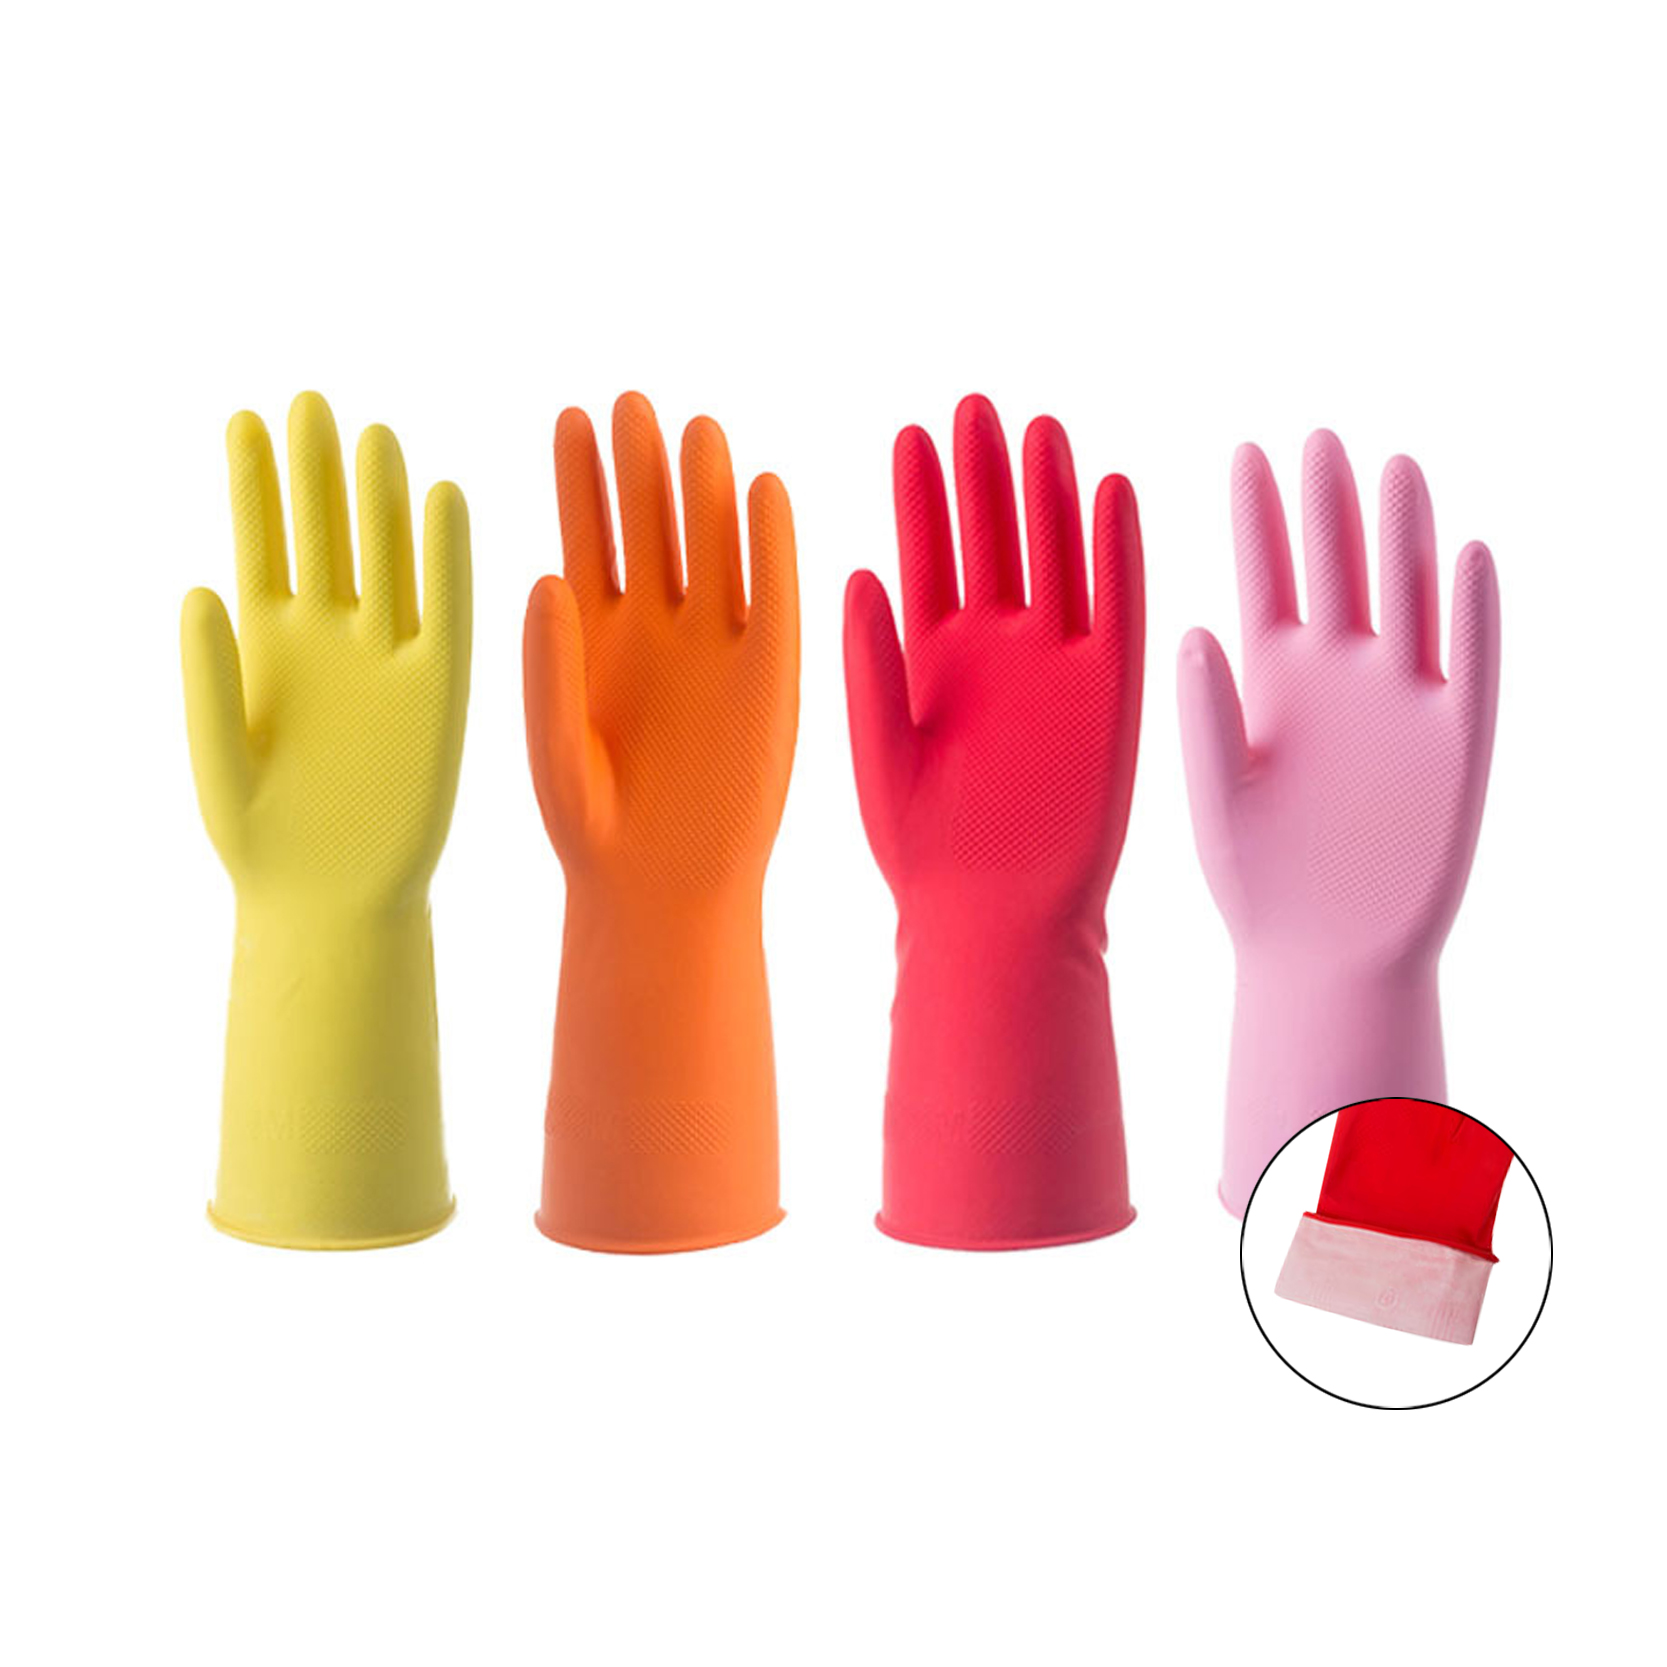 Hnab looj tes ntxuav tais diav, Professional Natural Rubber Latex Dishwashing Gloves, Reusable Kitchen Dishwasher Gloves Featured Image